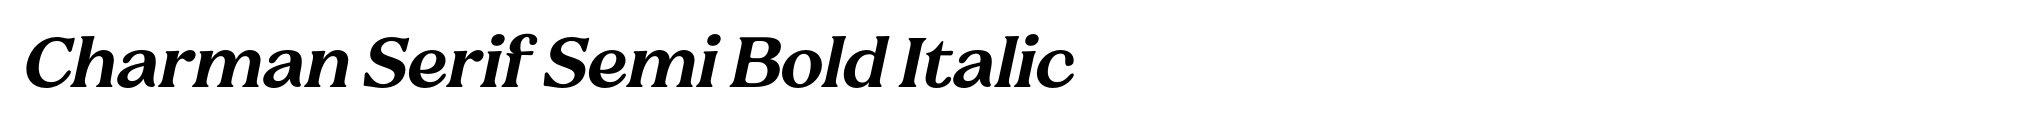 Charman Serif Semi Bold Italic image